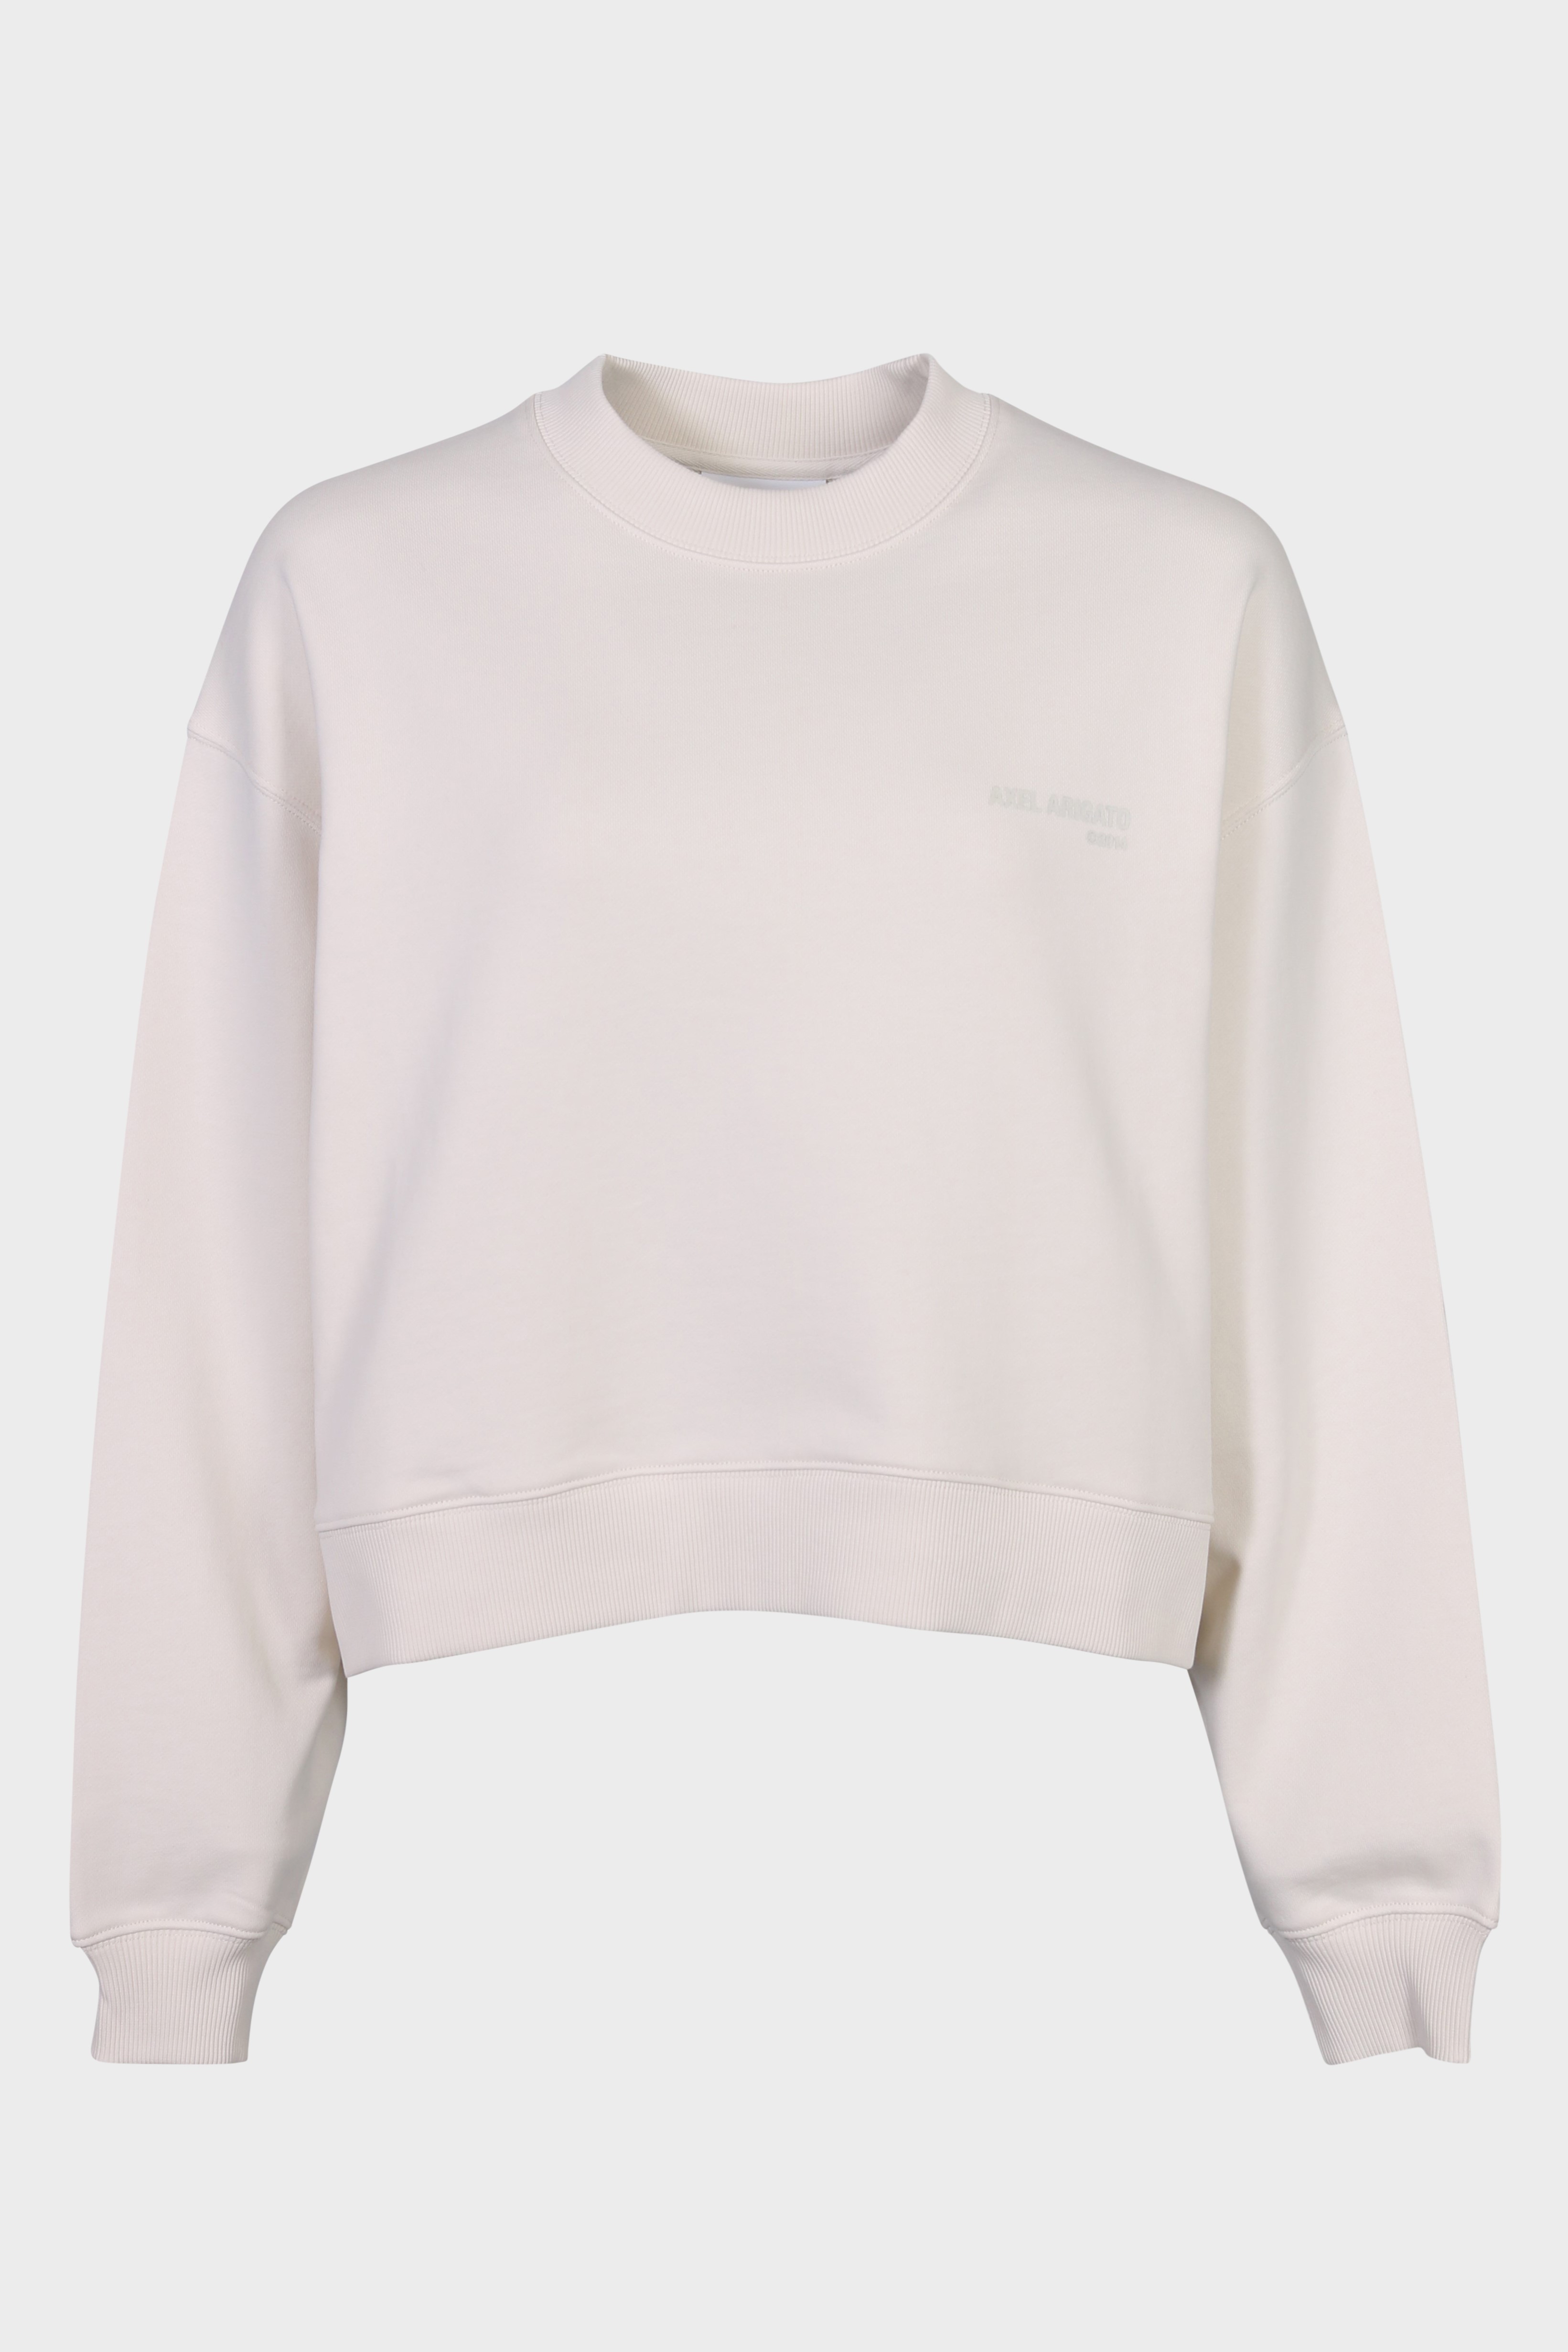 AXEL ARIGATO Legacy Sweatshirt in Off White XS